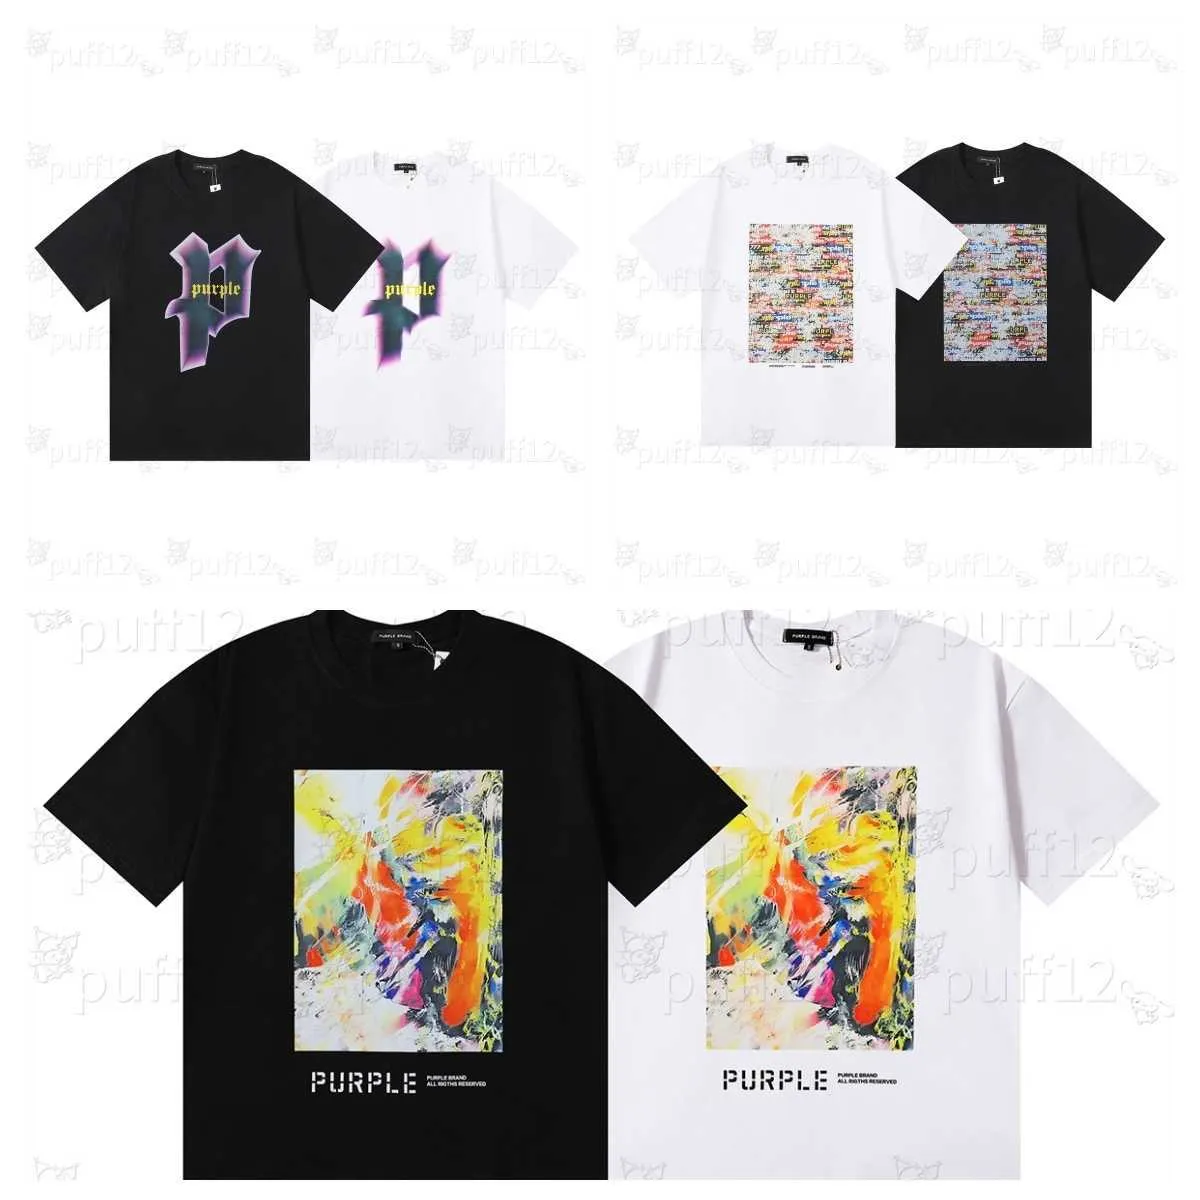 Męska designerska koszulka fioletowa marka T -koszulka 100% bawełniana koszula graffiti evil zabawa kolorowy alfabet szkic szkic olejny wzór Hip Hop luźne top